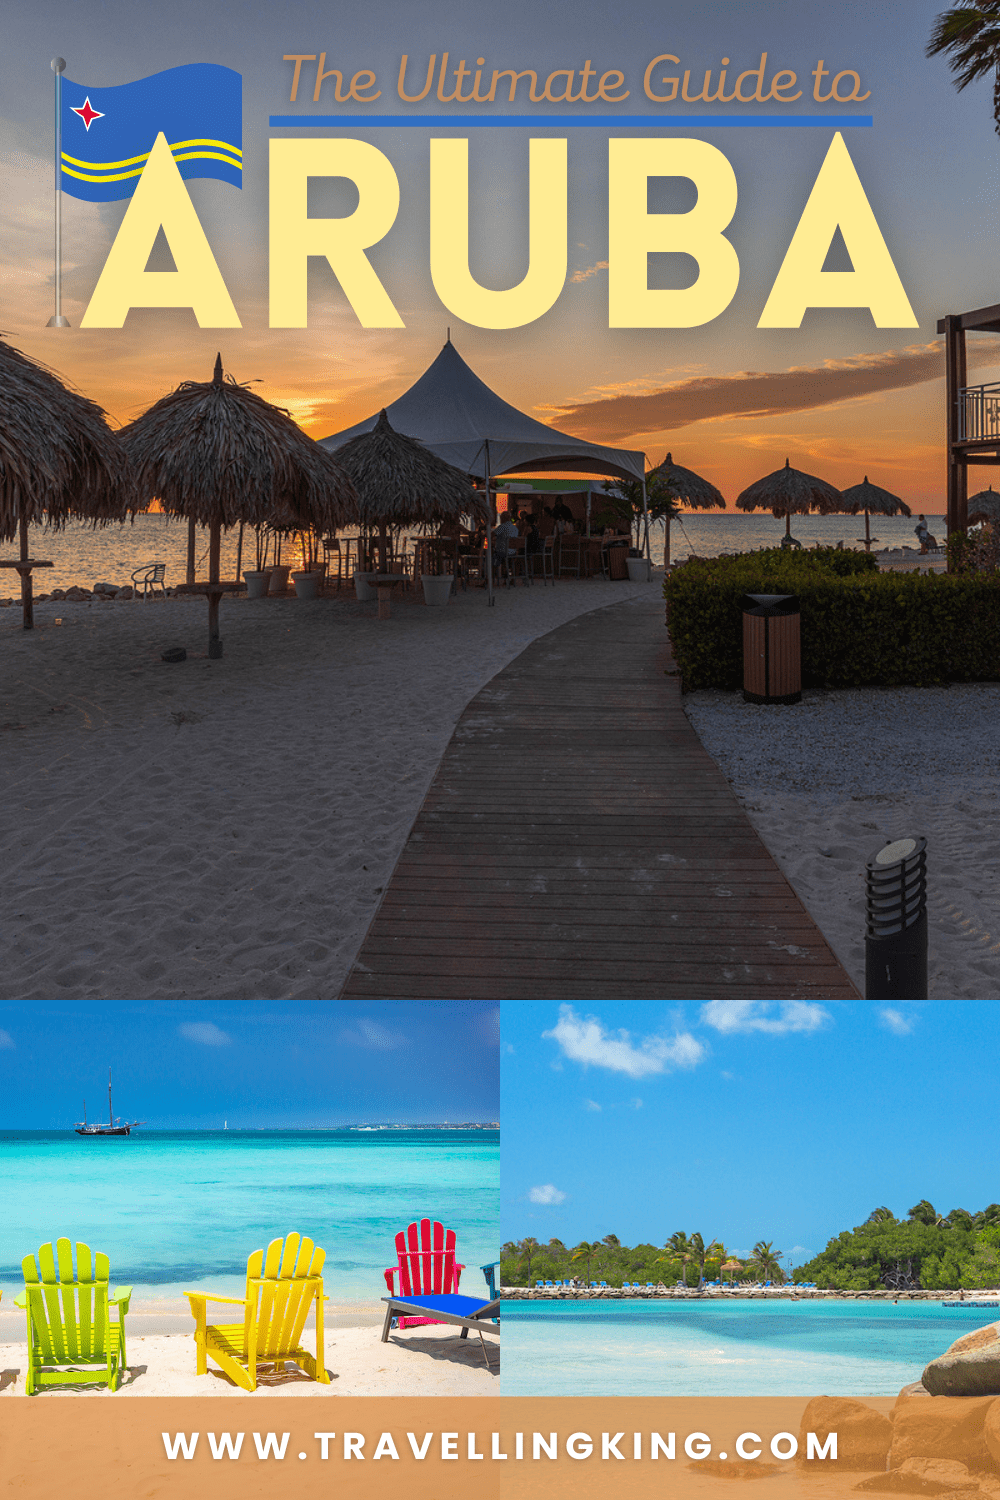 The Ultimate Guide to Aruba